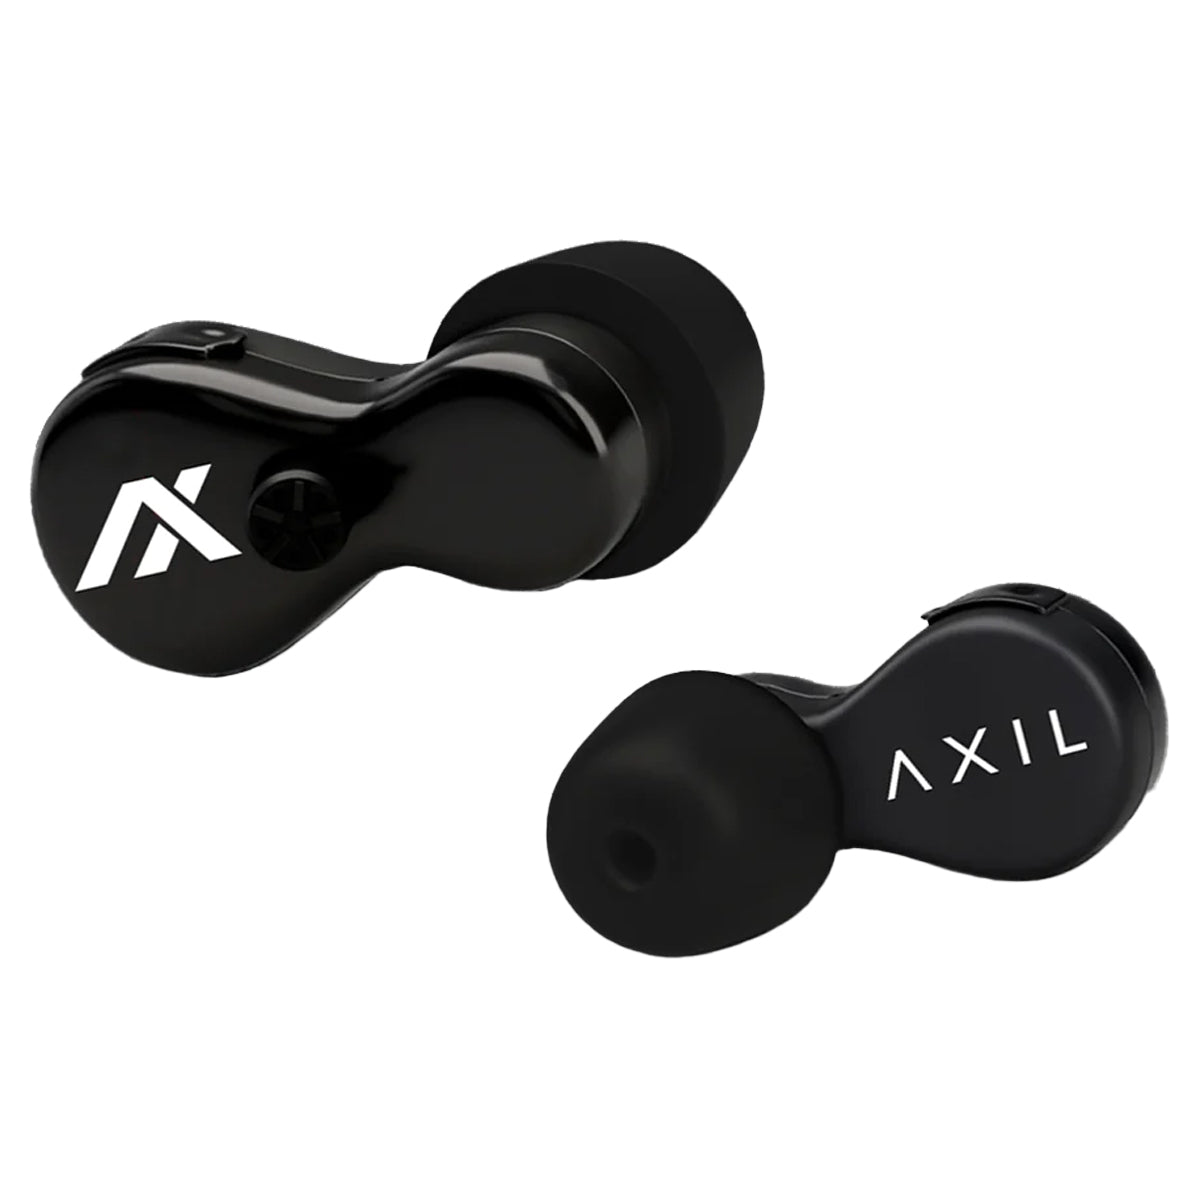 Axil GS Digital 2 Ear Buds in  by GOHUNT | Axil - GOHUNT Shop